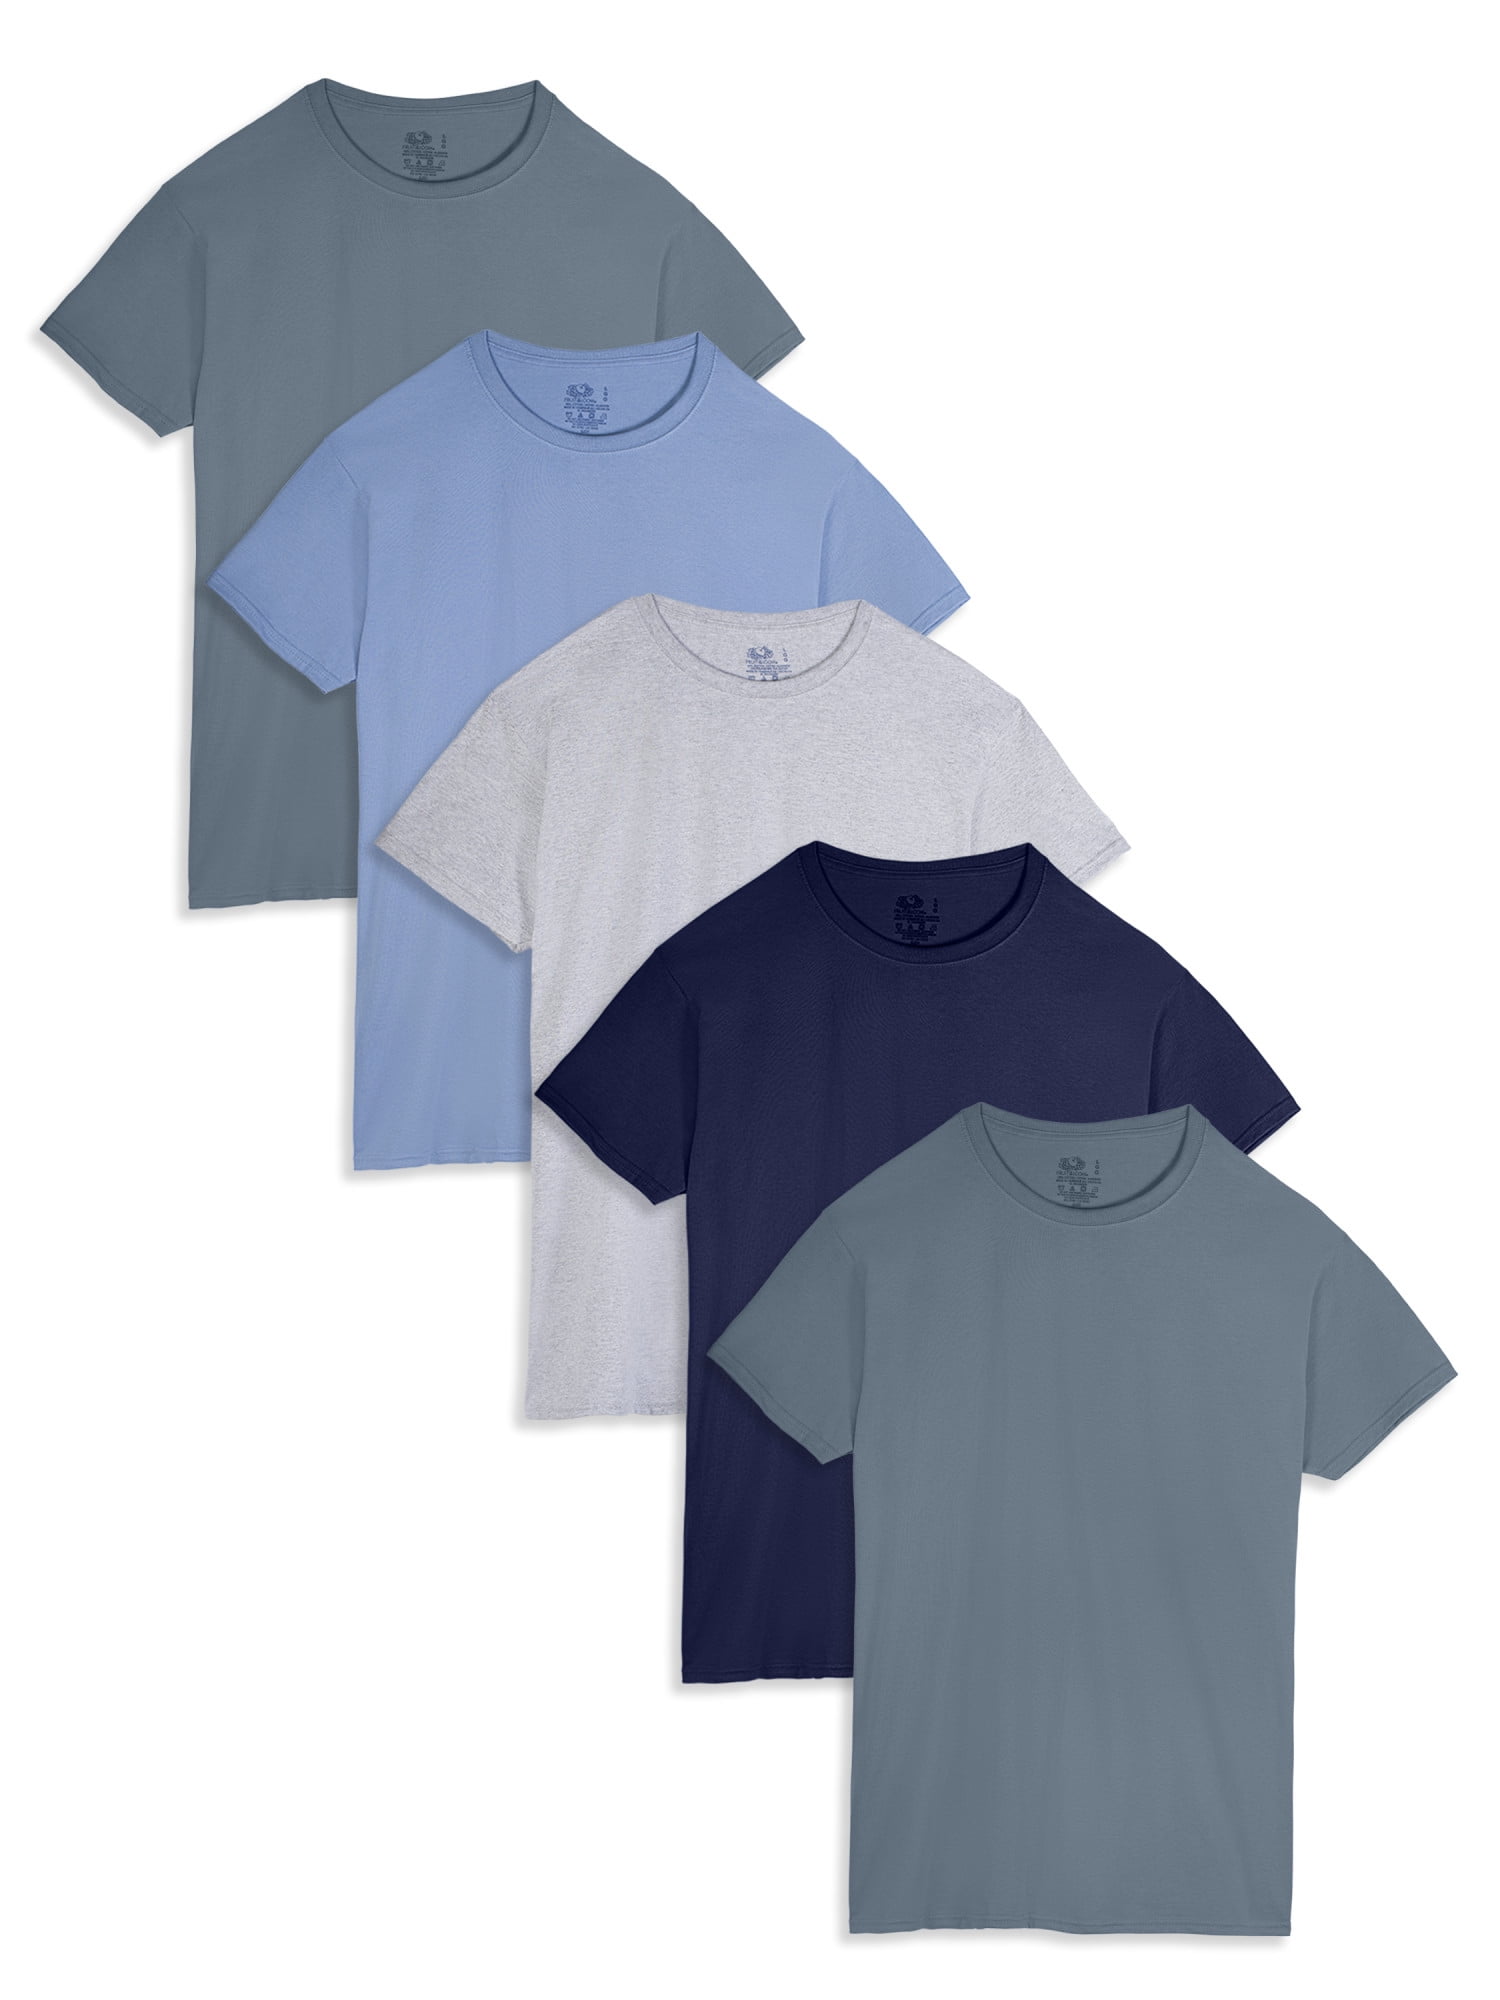 Navy Blue XL discount 66% NoName T-shirt MEN FASHION Shirts & T-shirts Basic 